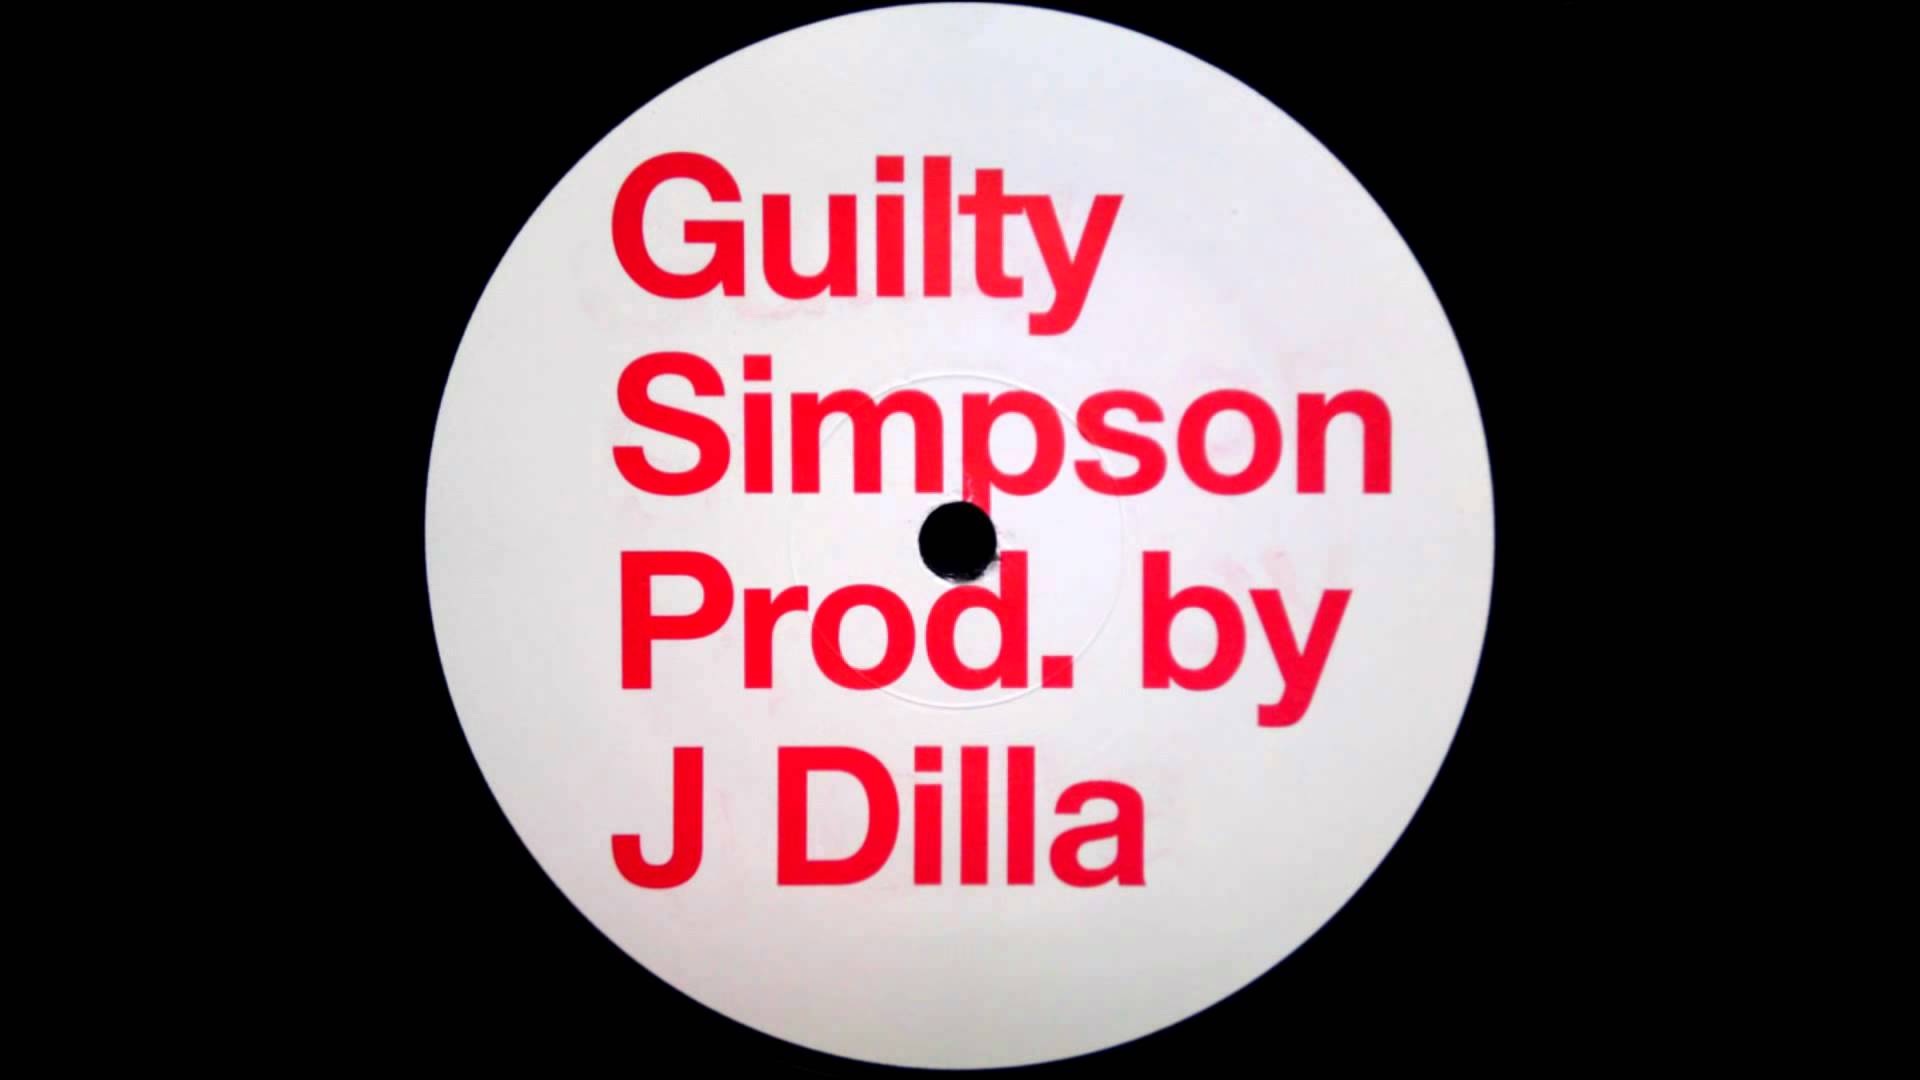 Guilty Simpson J Dilla